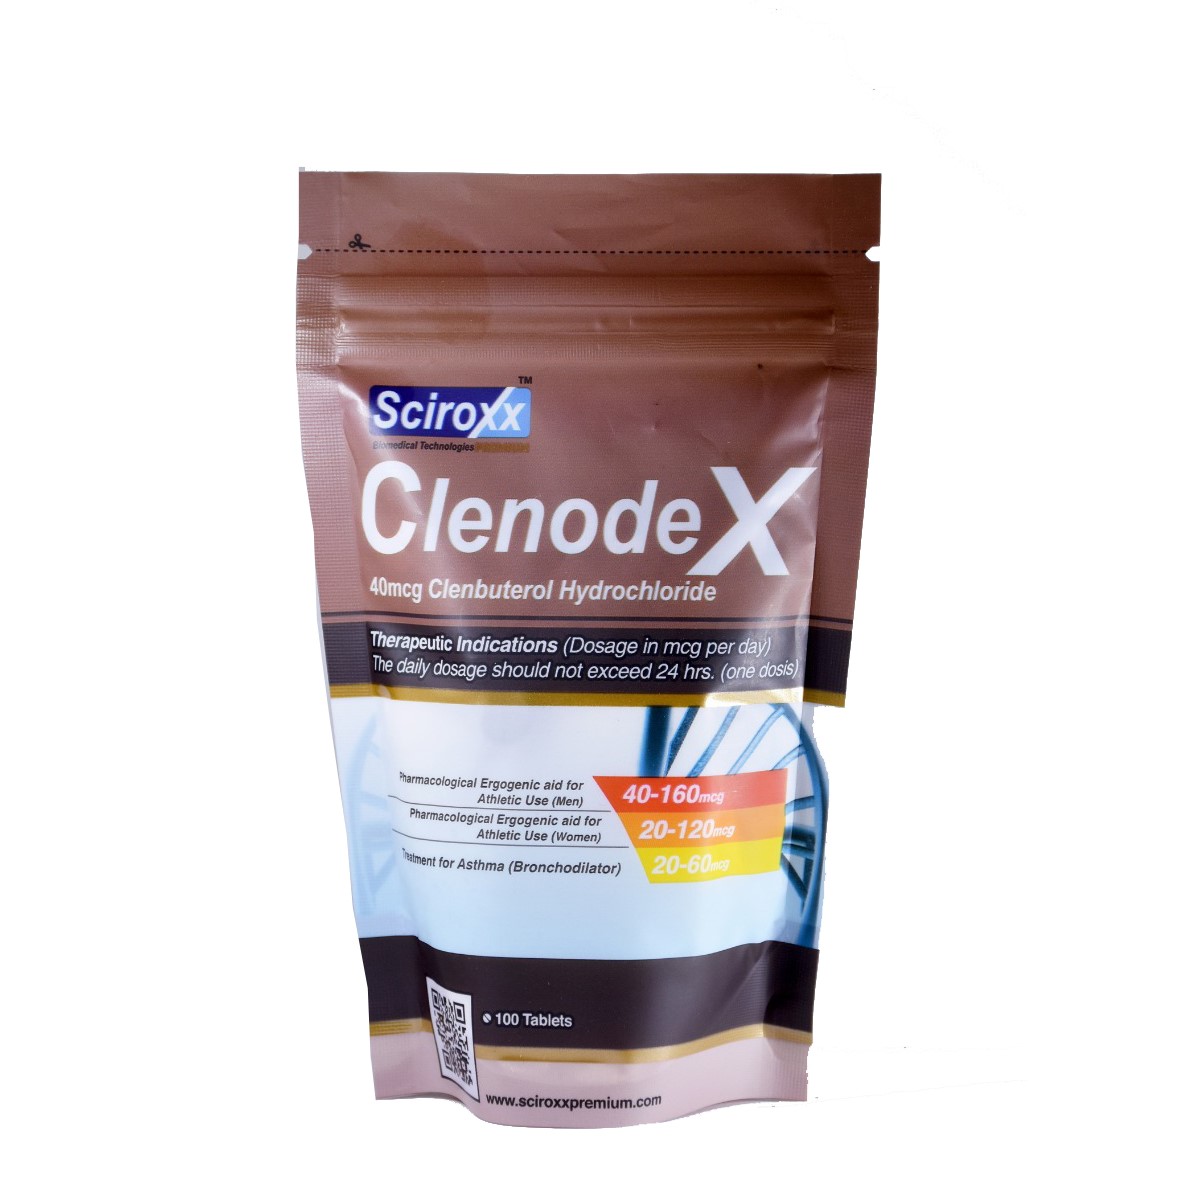 Sciroxx Premium – Clenodex Clenbuterol 40mcgr. 100tabs.